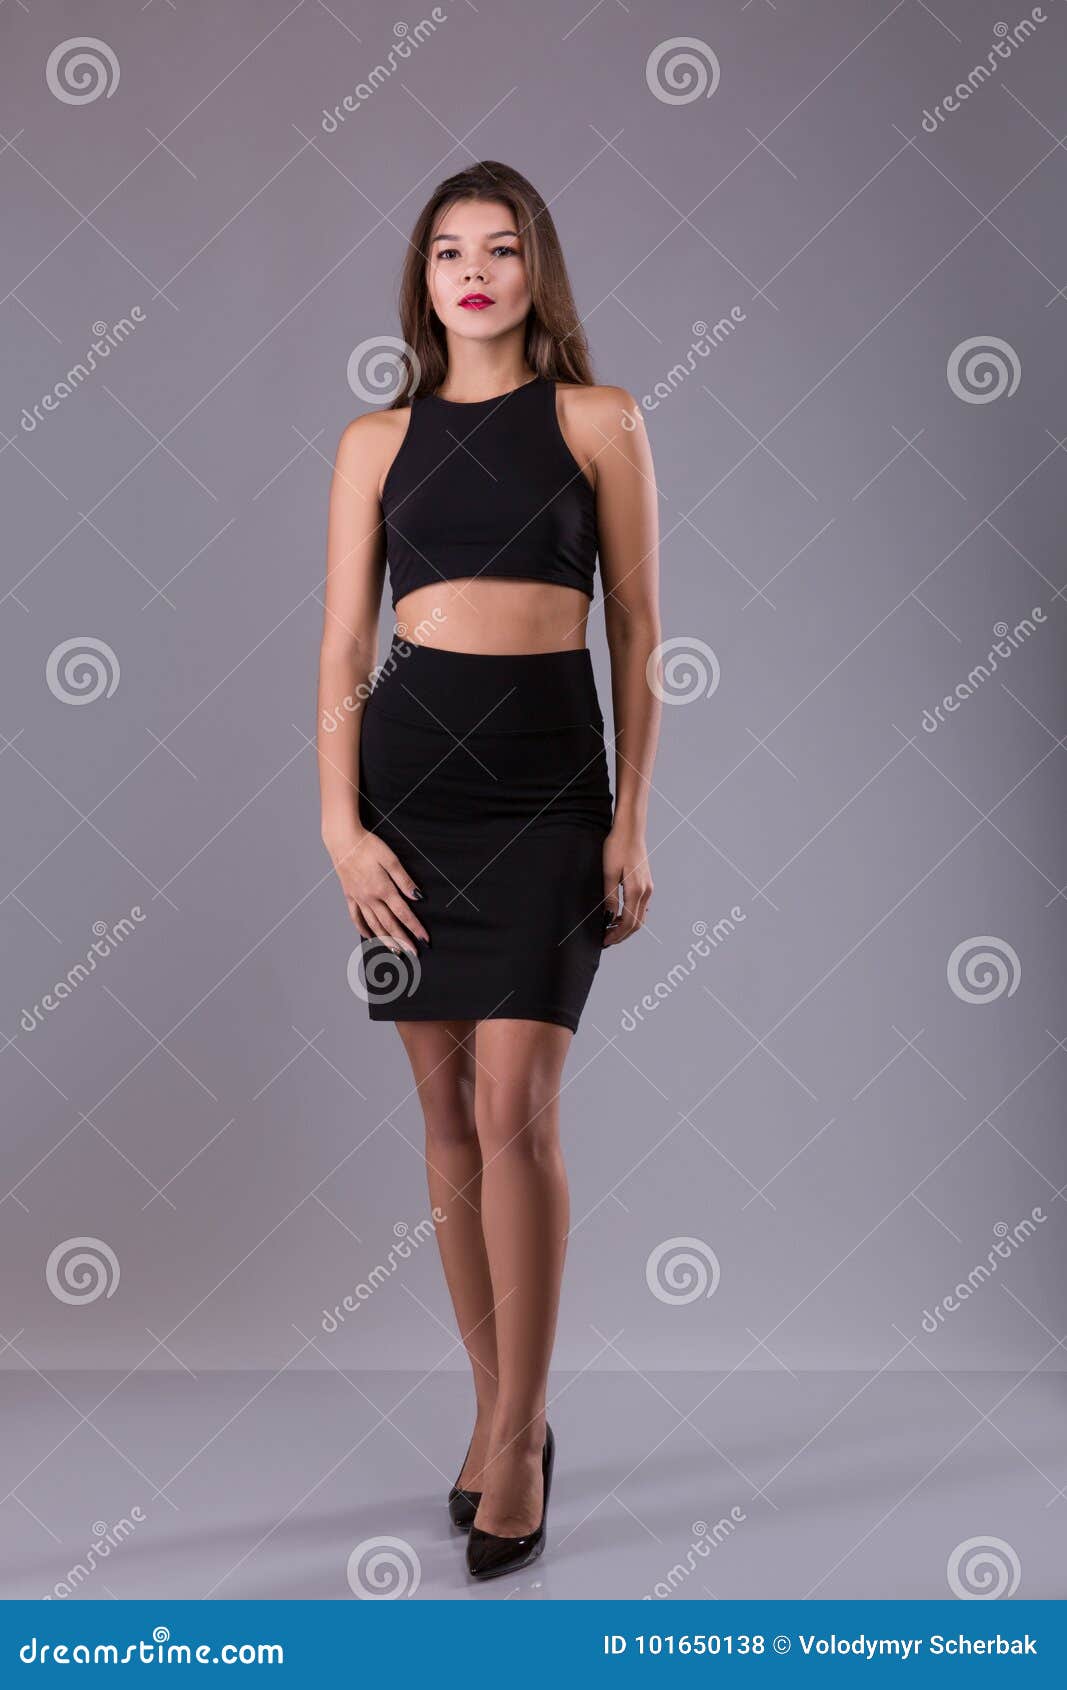 https://thumbs.dreamstime.com/z/beautiful-fit-woman-short-black-bra-top-skirt-gray-studio-background-studio-shoot-beautiful-fit-woman-short-101650138.jpg